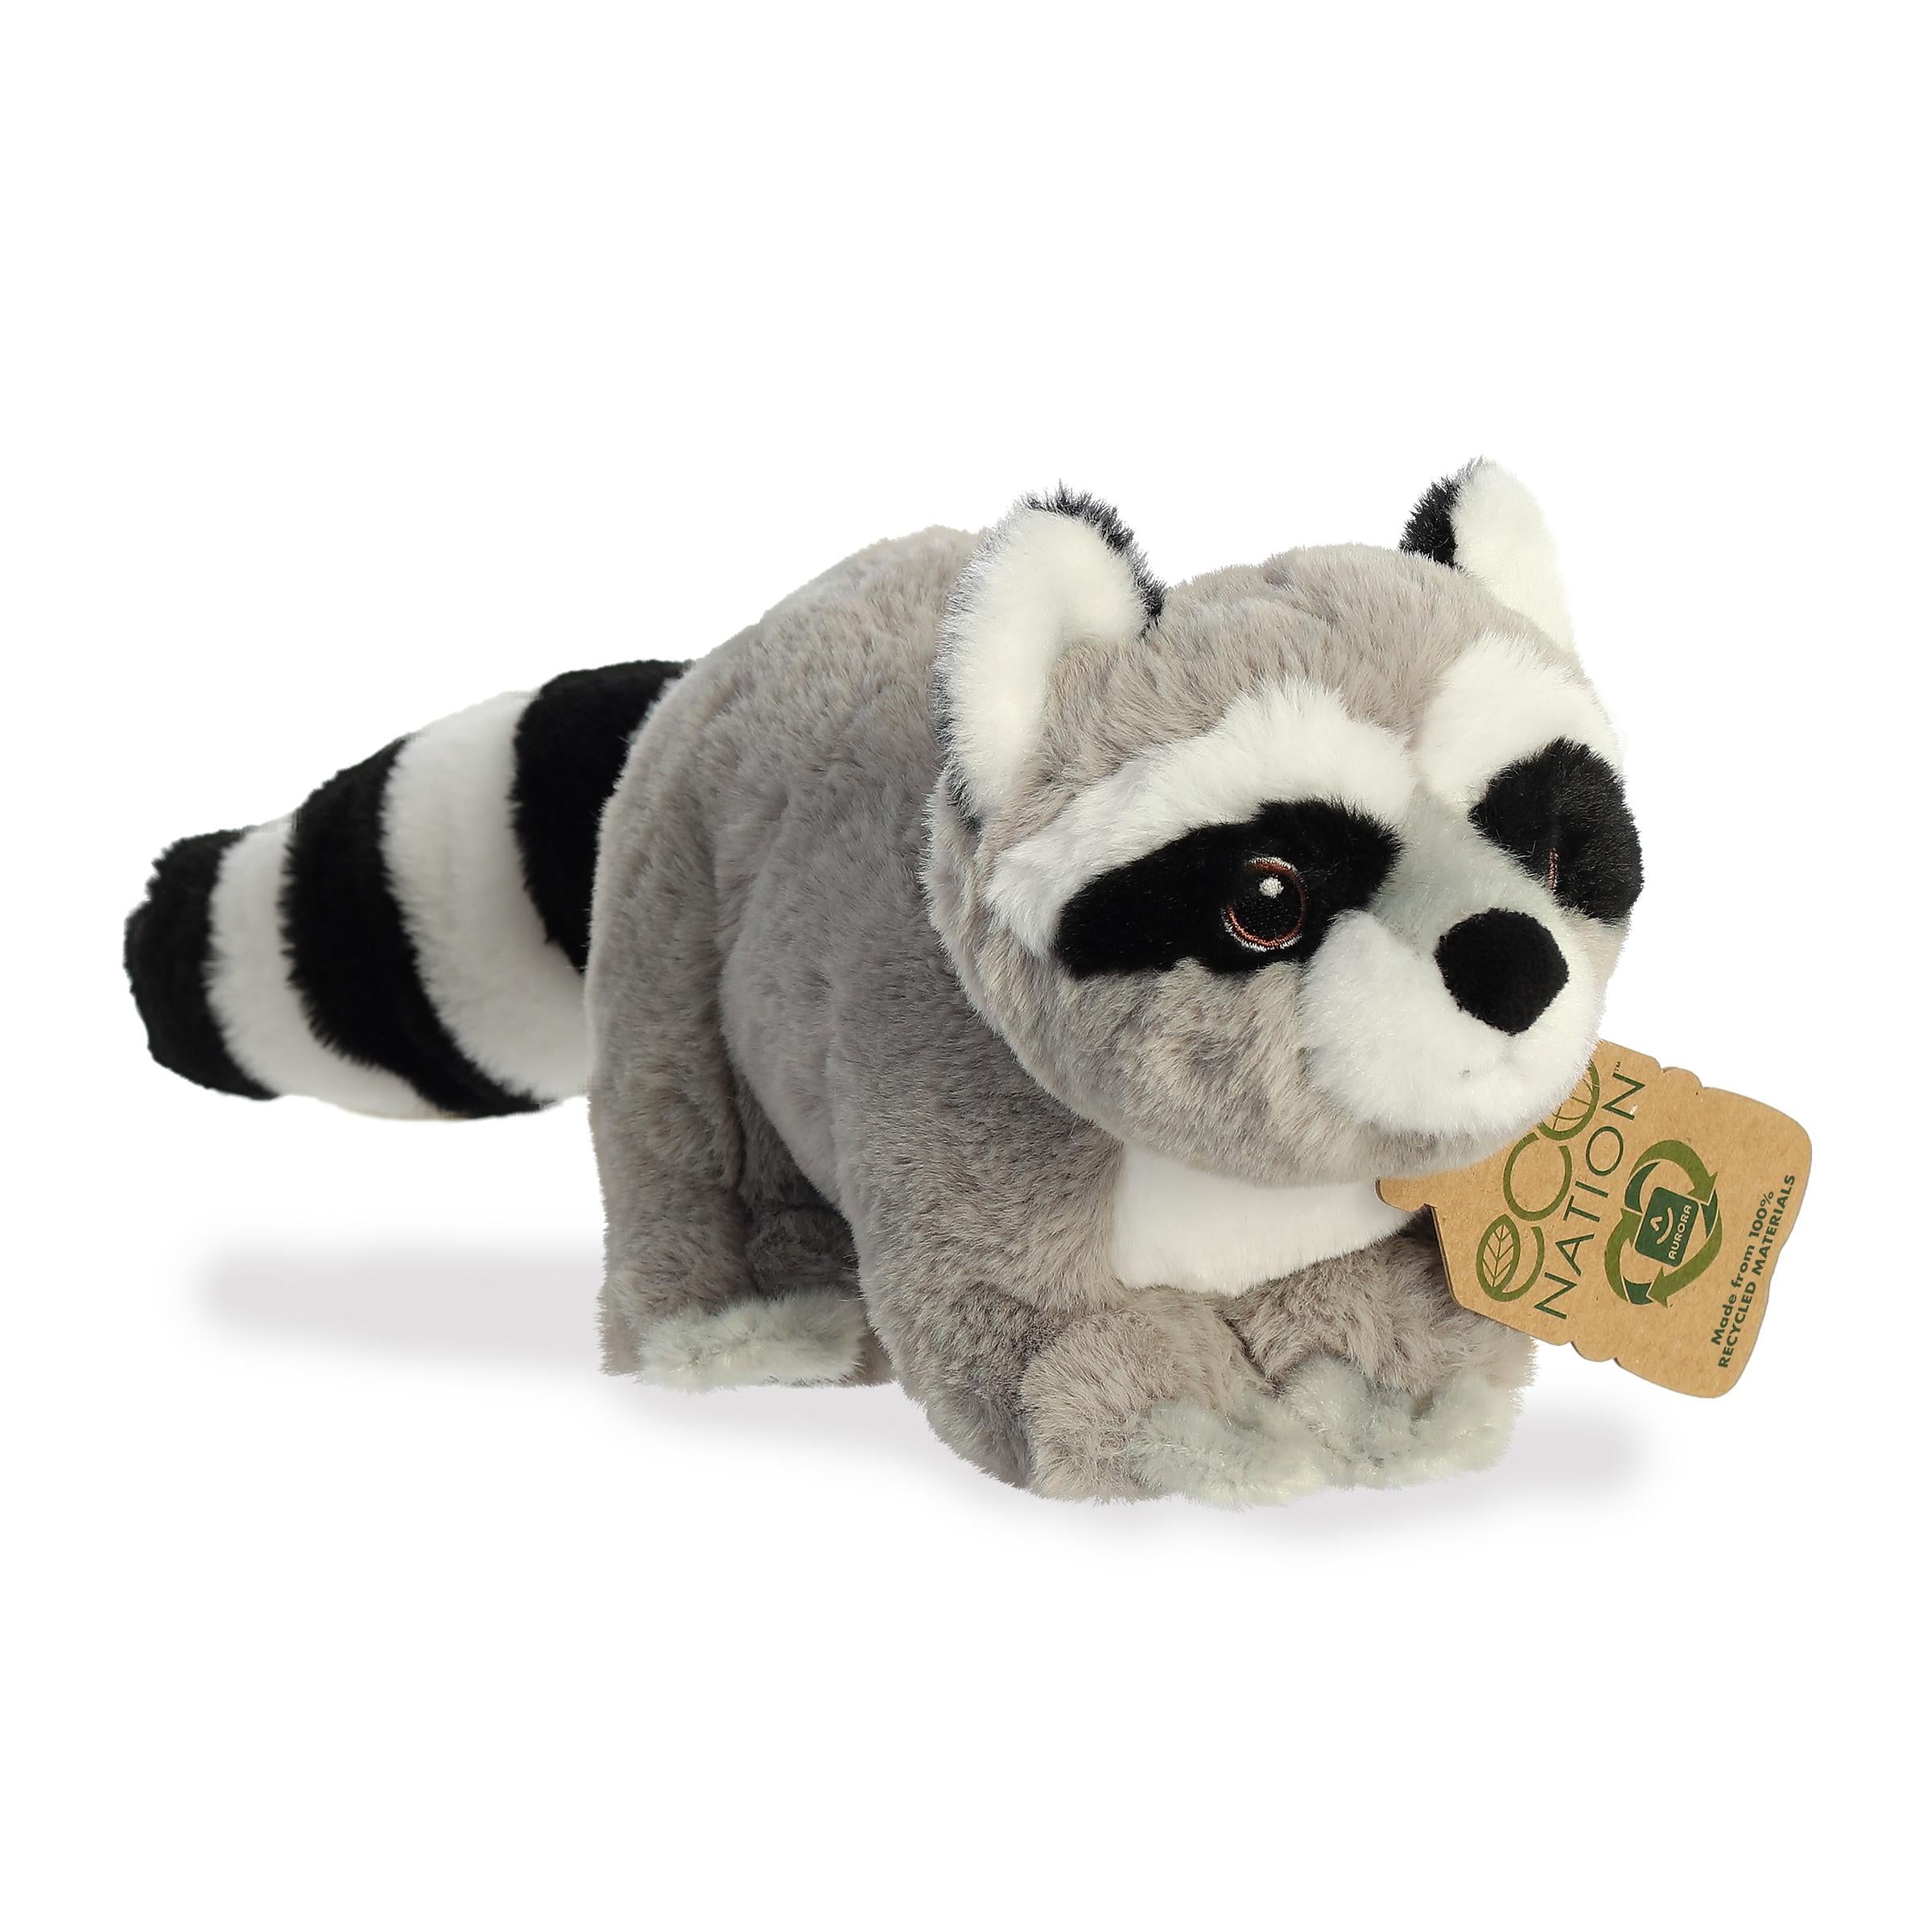 Mini Panda Ã¢â‚¬â€œ Fluffy Eco-Nation Stuffed Animals Ã¢â‚¬â€œ Aurora –  Aurora®